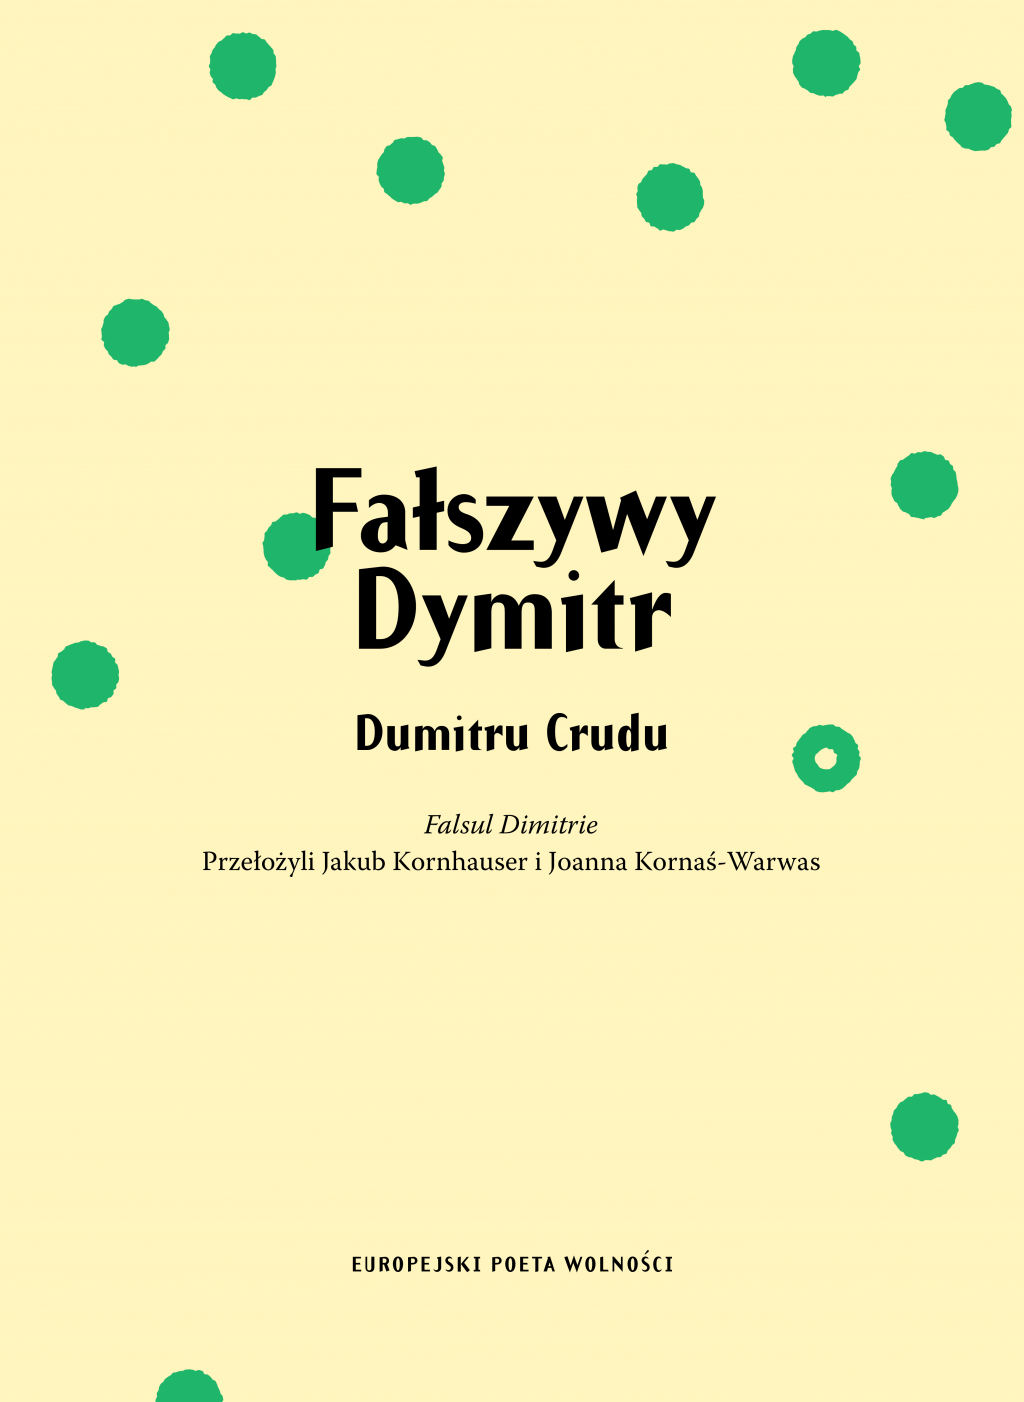 Dumitru Crudu, nominalizare la Premiul Poetul European al Libertatii 2018